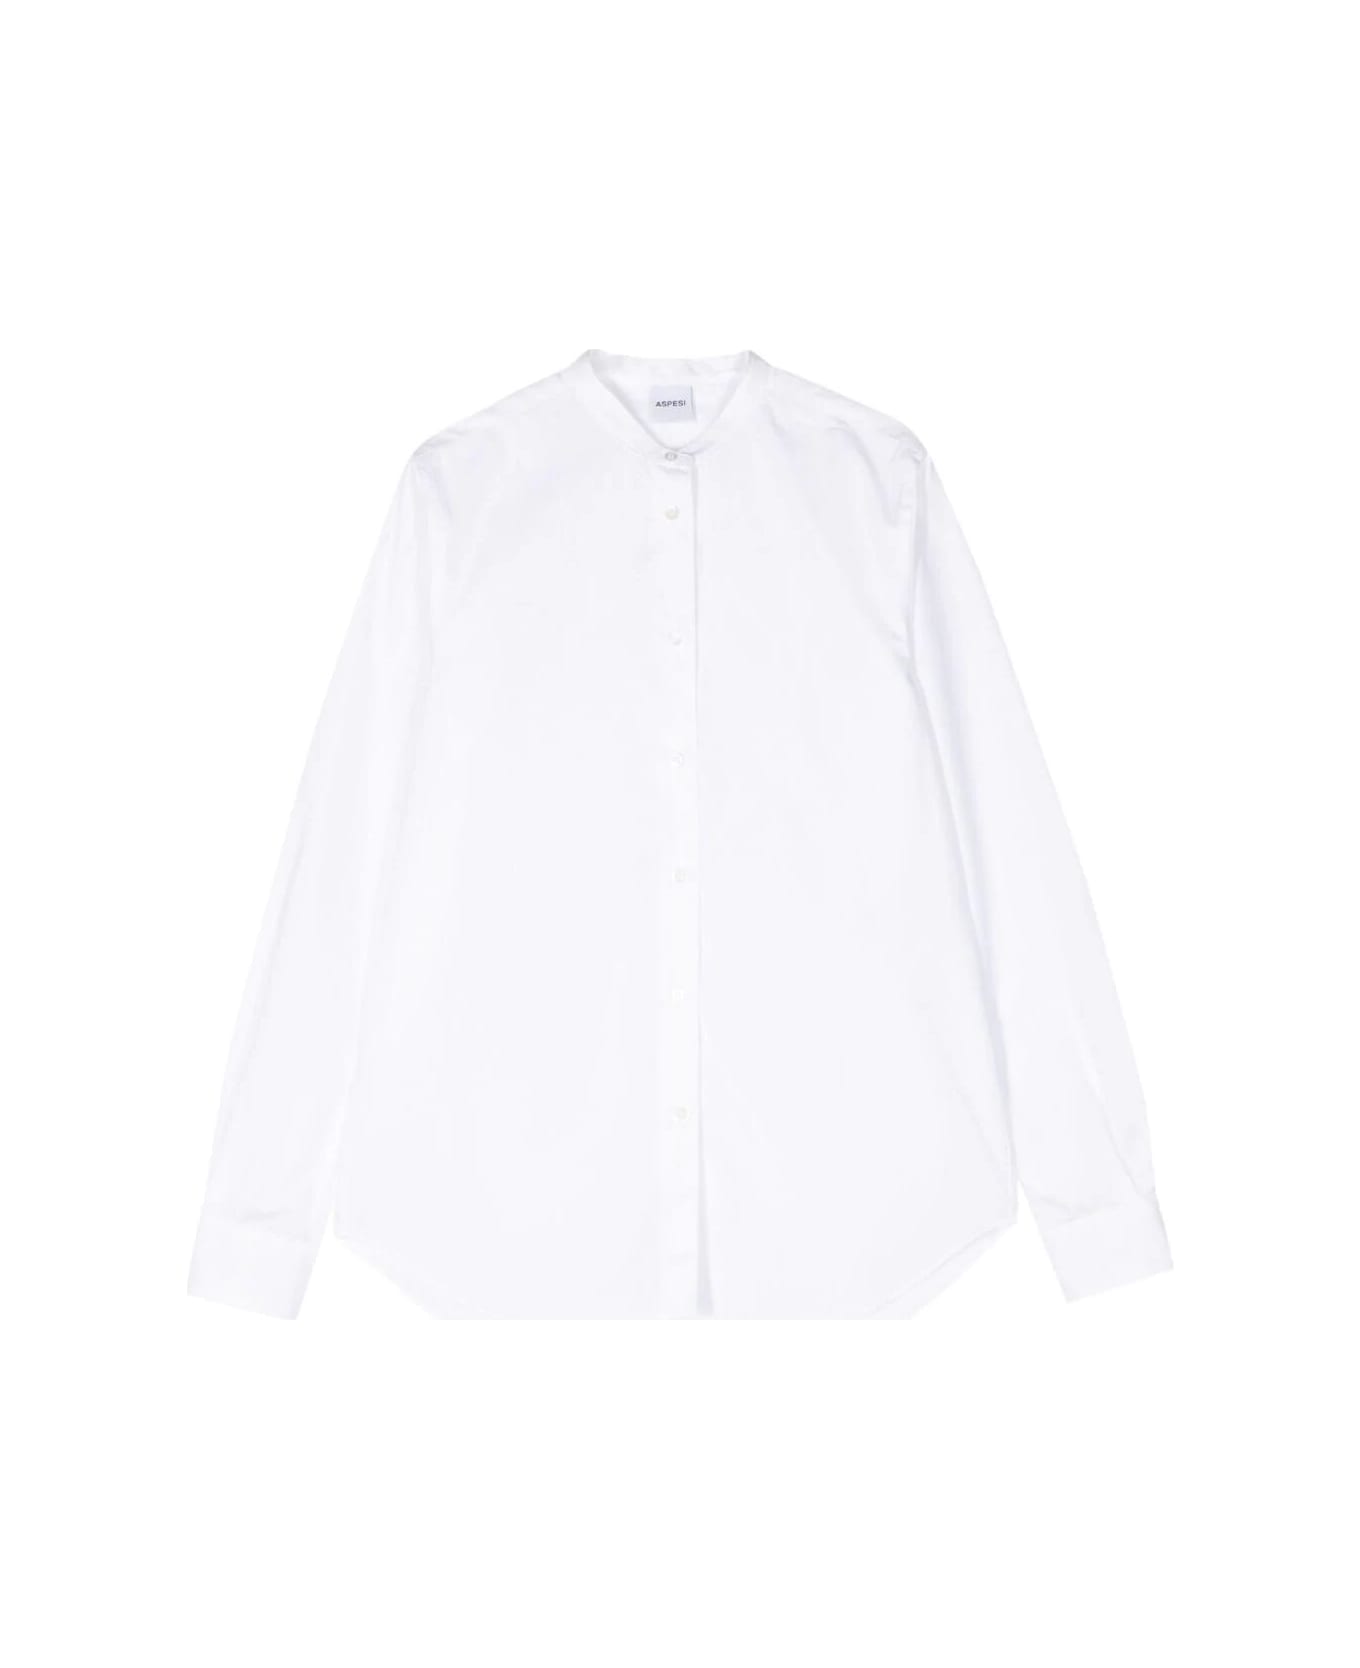 Aspesi Mod 5416 Shirt - White